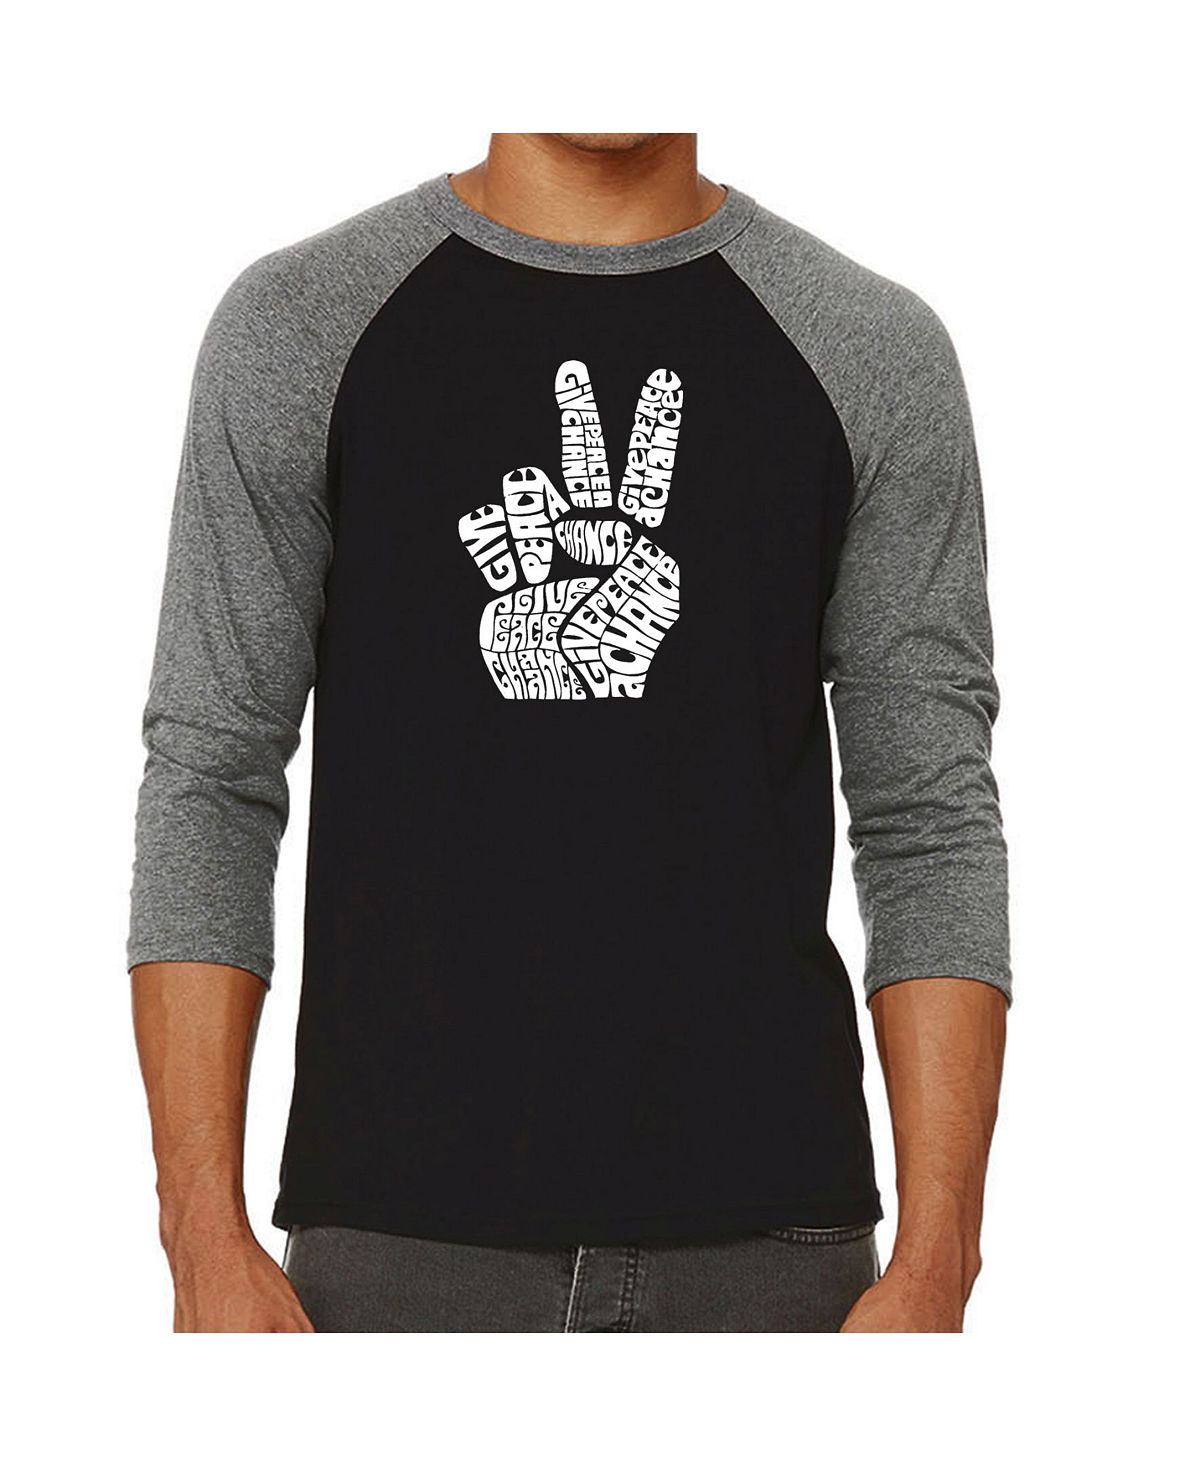 Мужская футболка с регланом word art peace fingers LA Pop Art, серый мужская футболка с принтом пиратский череп и регланом word art la pop art черный